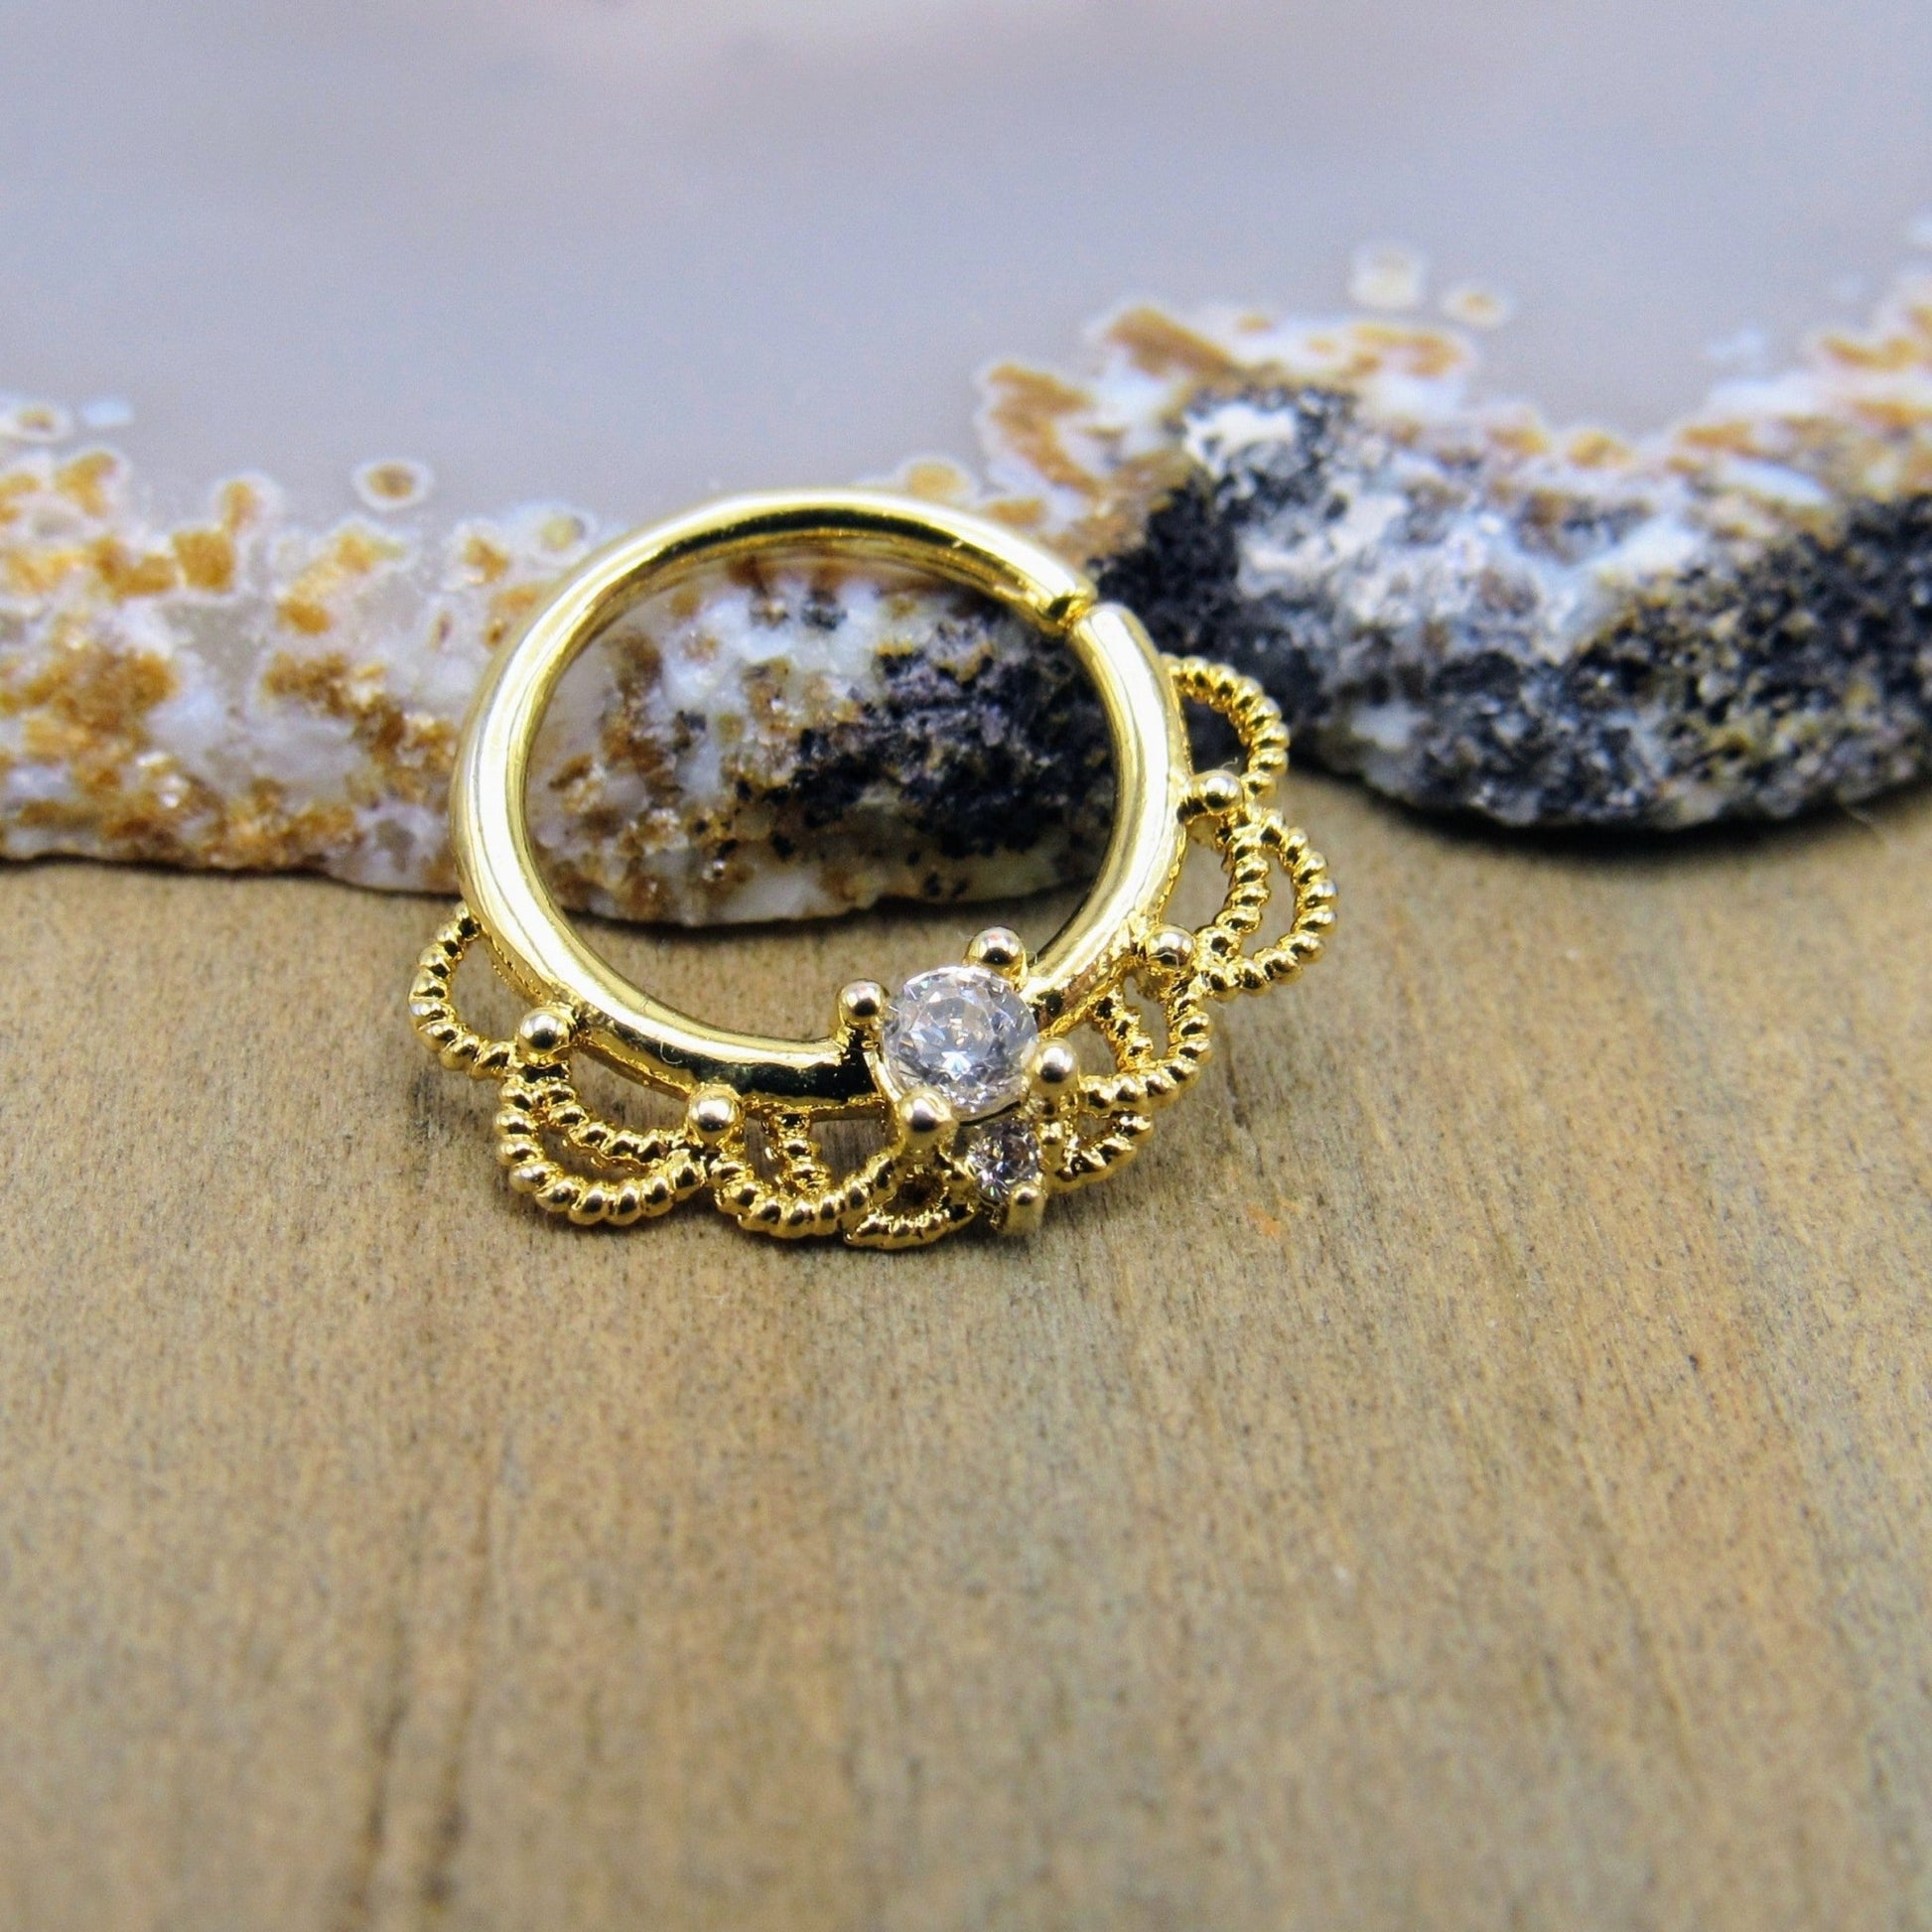 16g Gold septum ring 5/16" seam ring style 4mm cz prong set gemstone decorative filigree daith piercing earring - Siren Body Jewelry